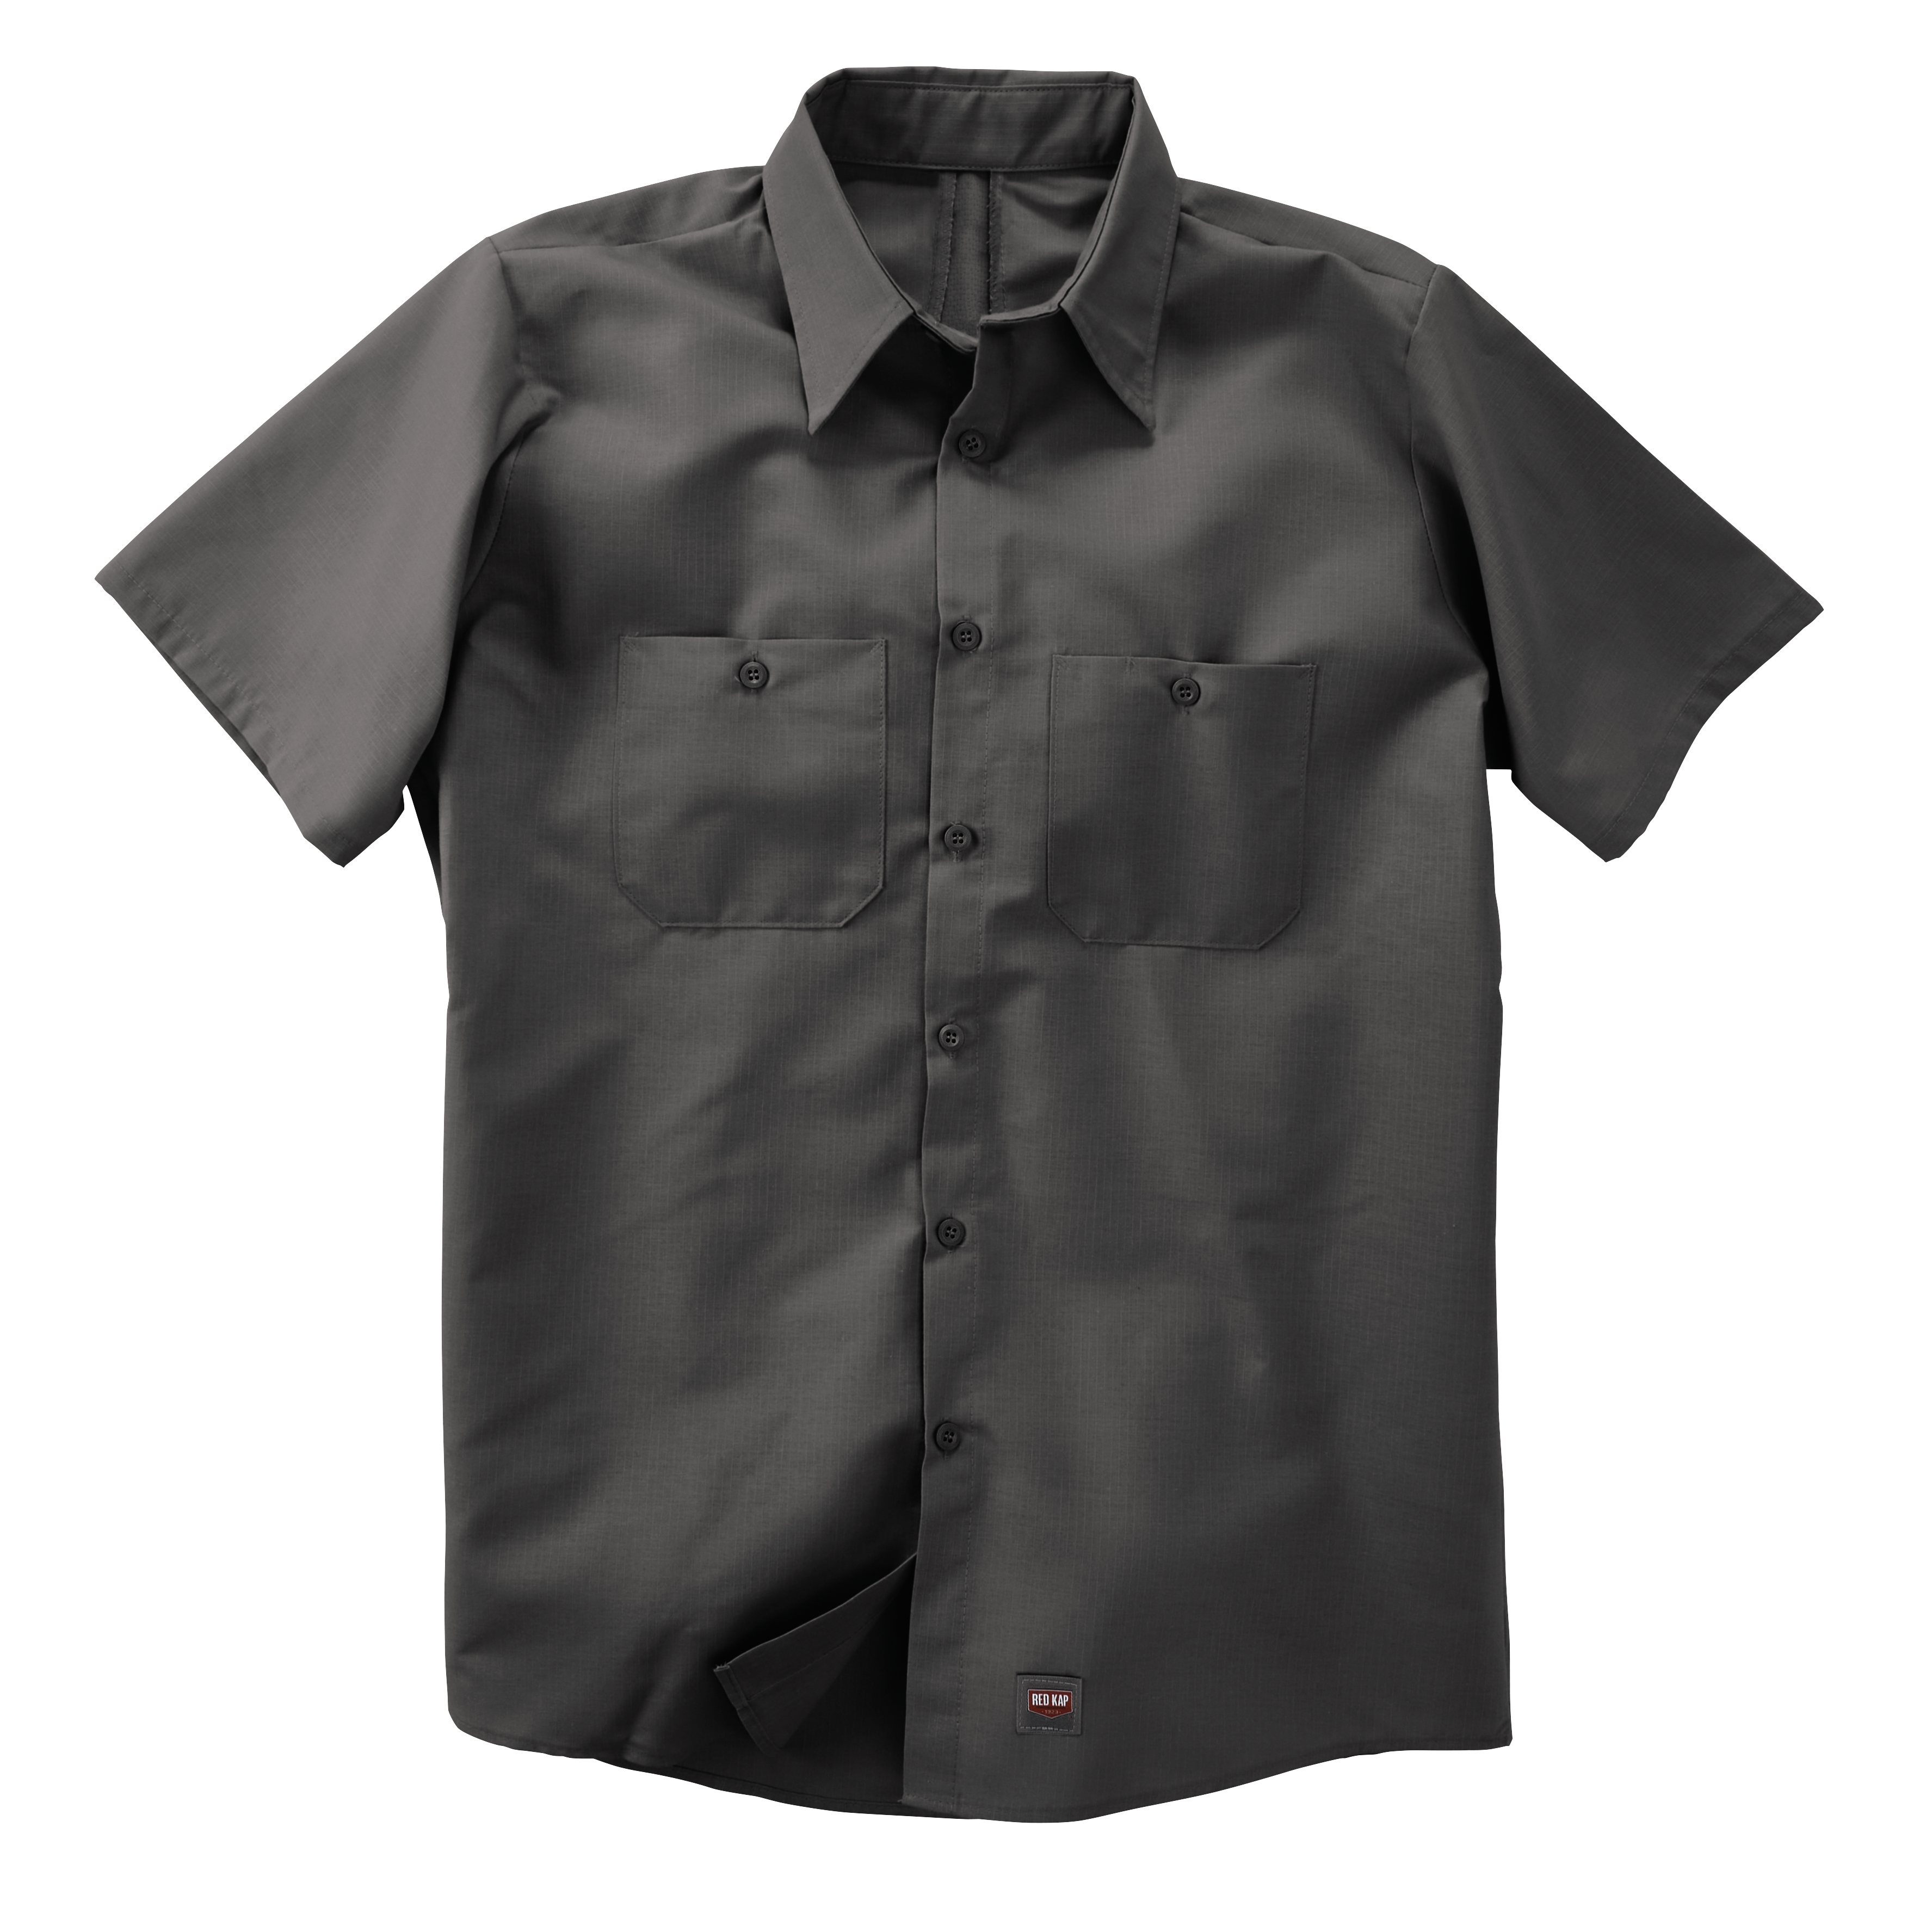 Red Kap Men's Short Sleeve Work Shirt with Mimix